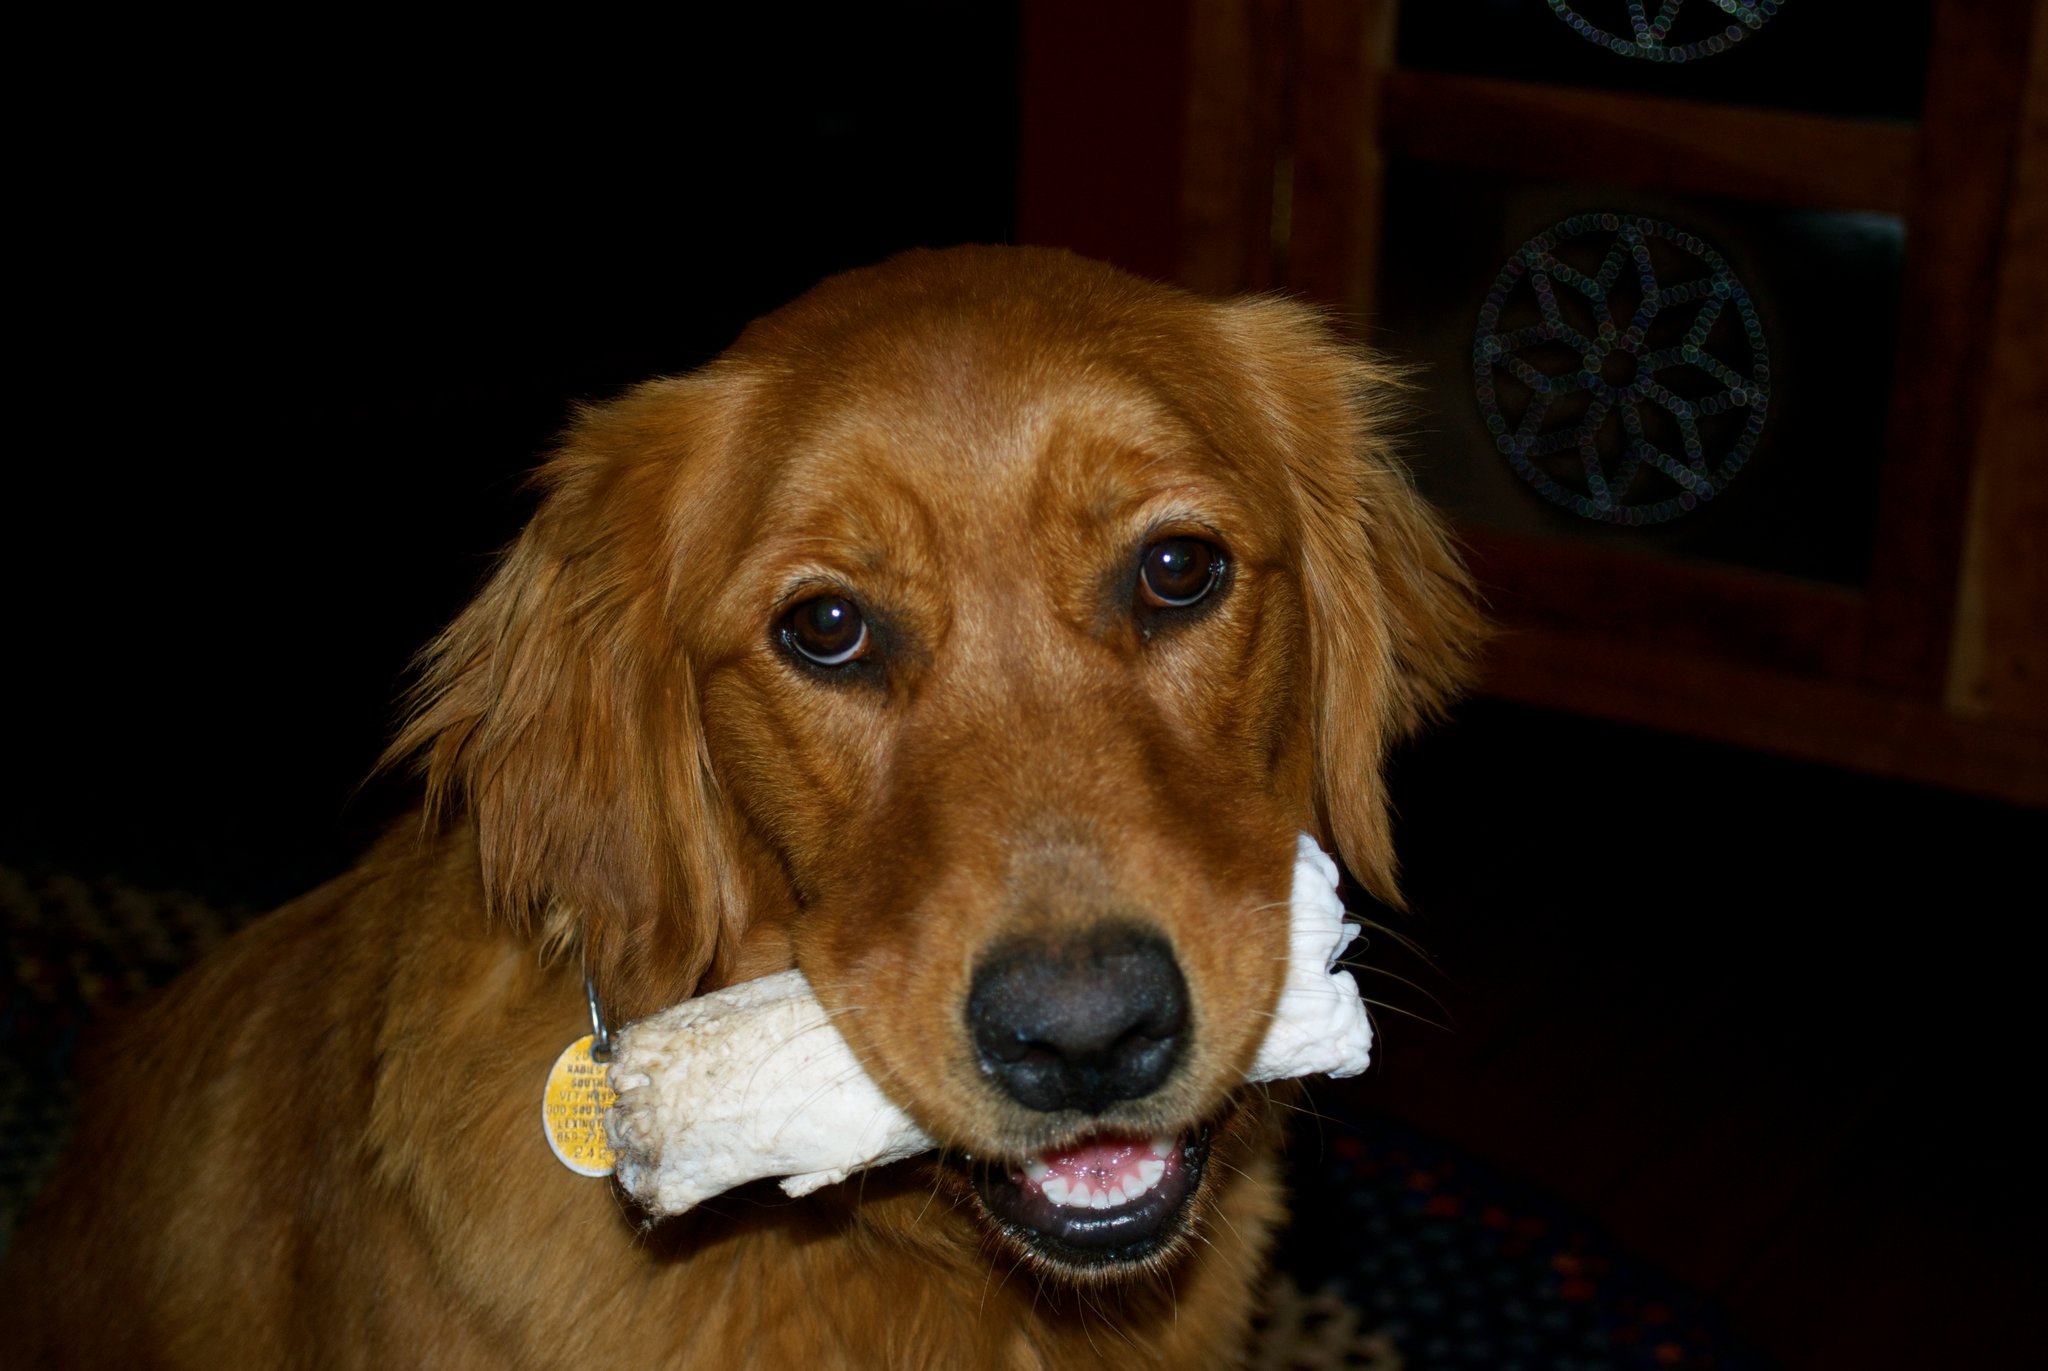 A dog, holding a bone